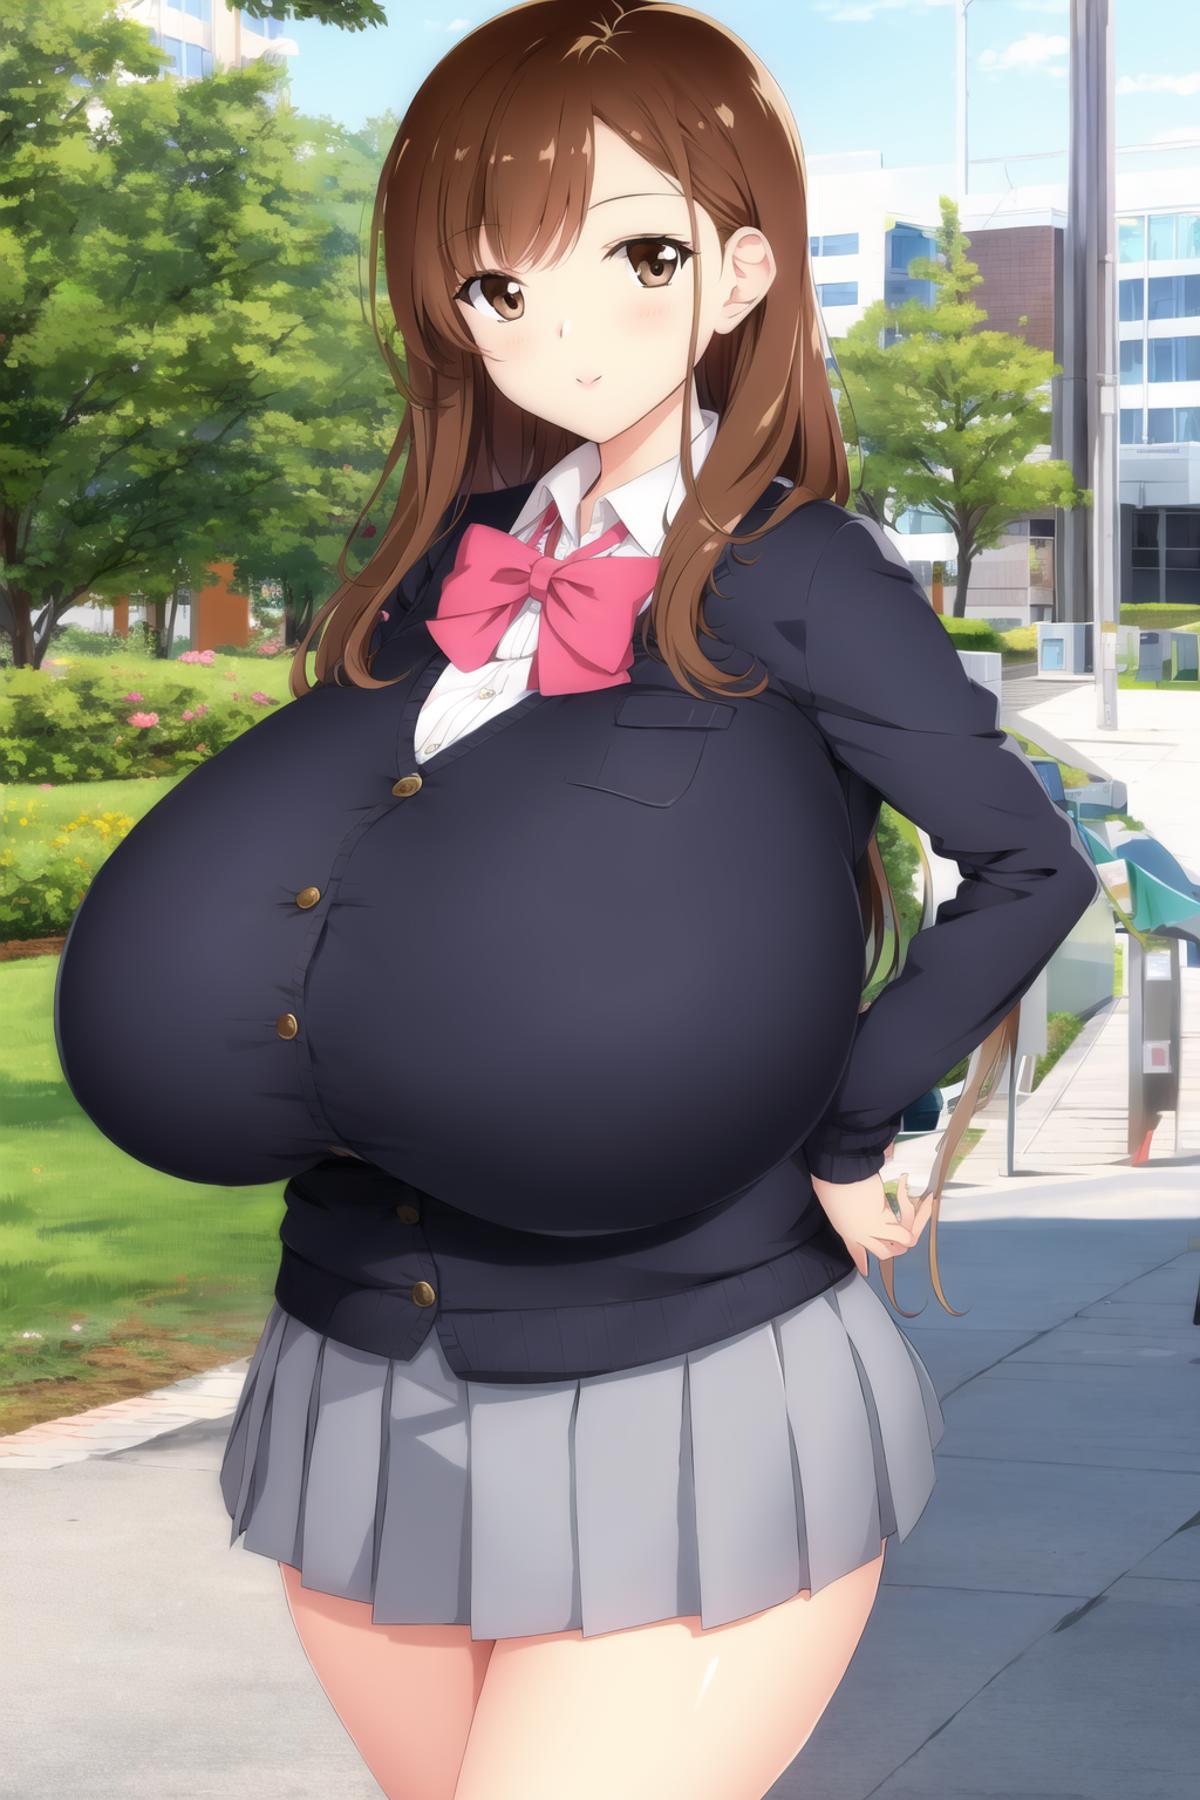 Huge anime boobies